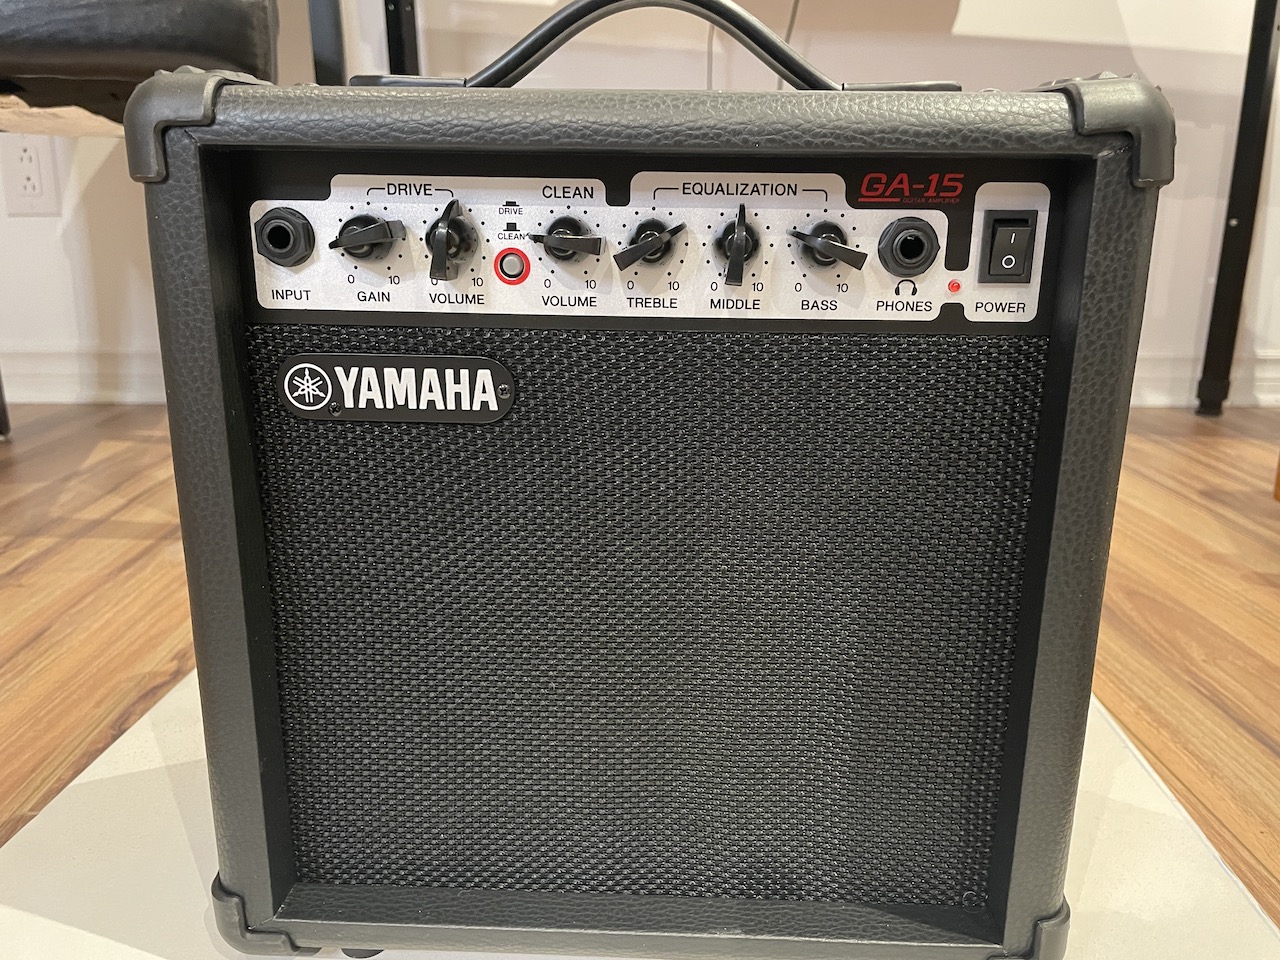 Yamaha GA-15 Amplifier